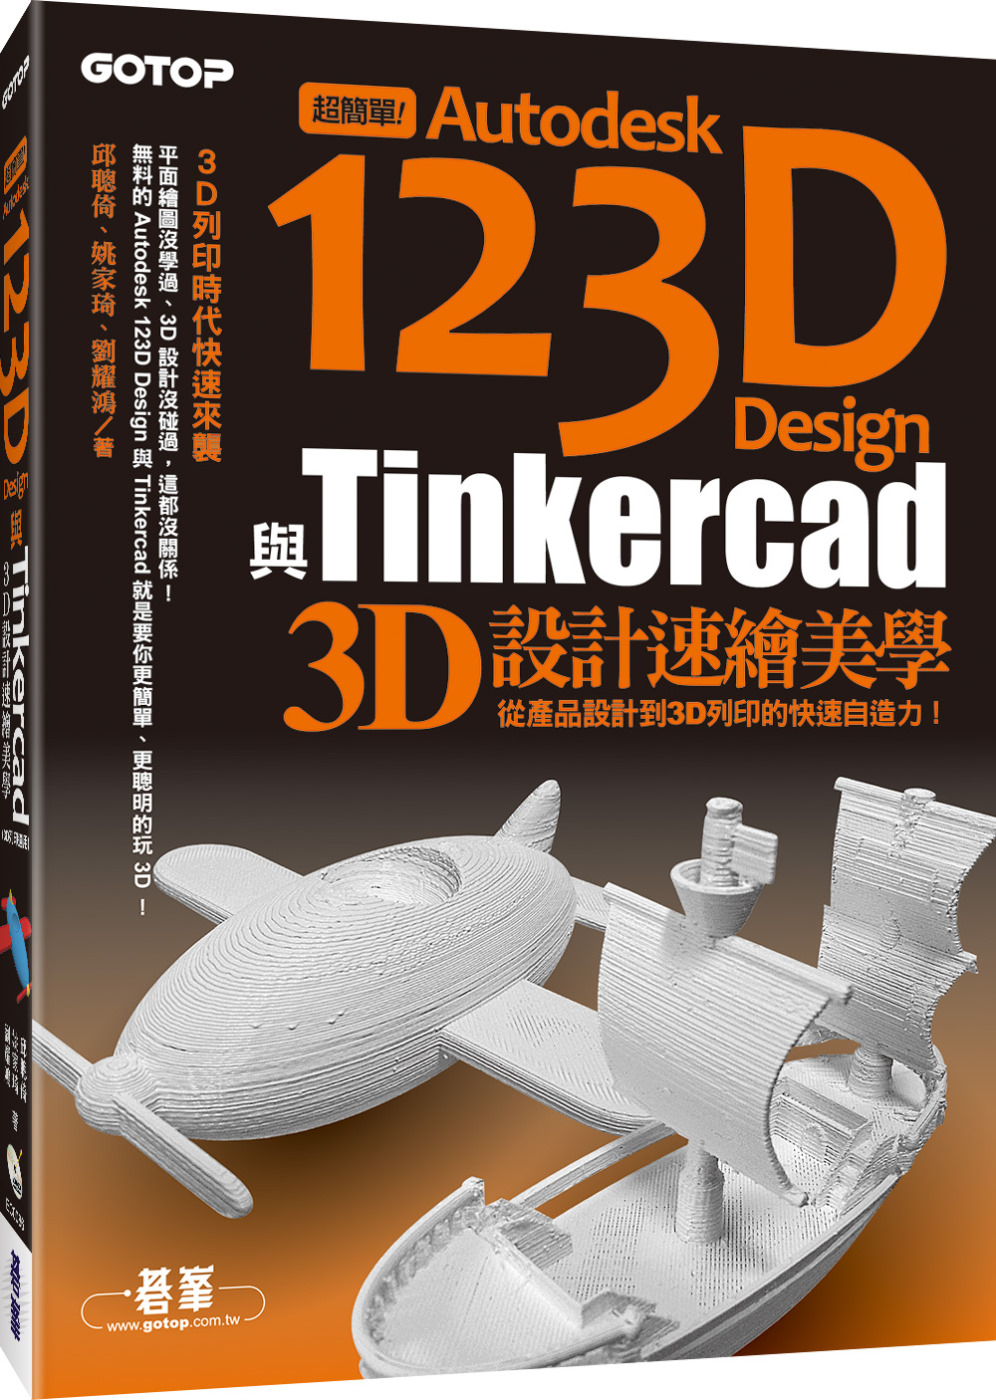 ►GO►最新優惠► 【書籍】超簡單！Autodesk 123D Design與Tinkercad 3D設計速繪美學(從產品設計到3D列印的快速自造力) (附150分鐘影音教學/範例/工具)